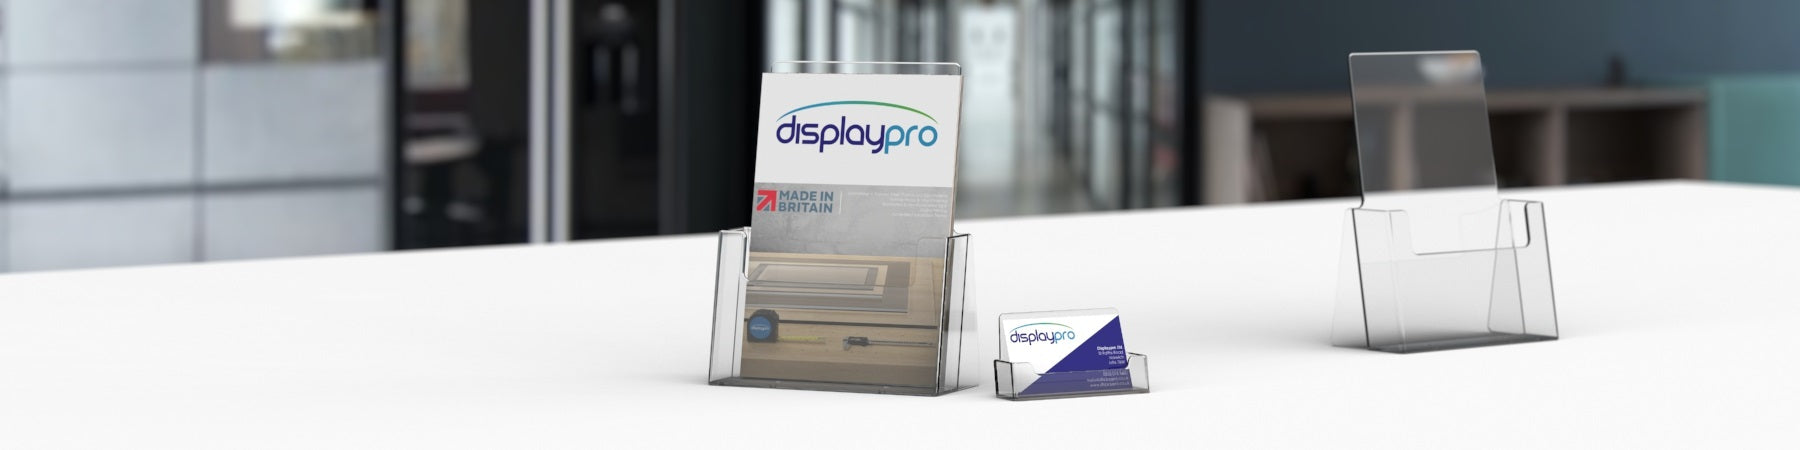 displaypro leaflet and business card holders